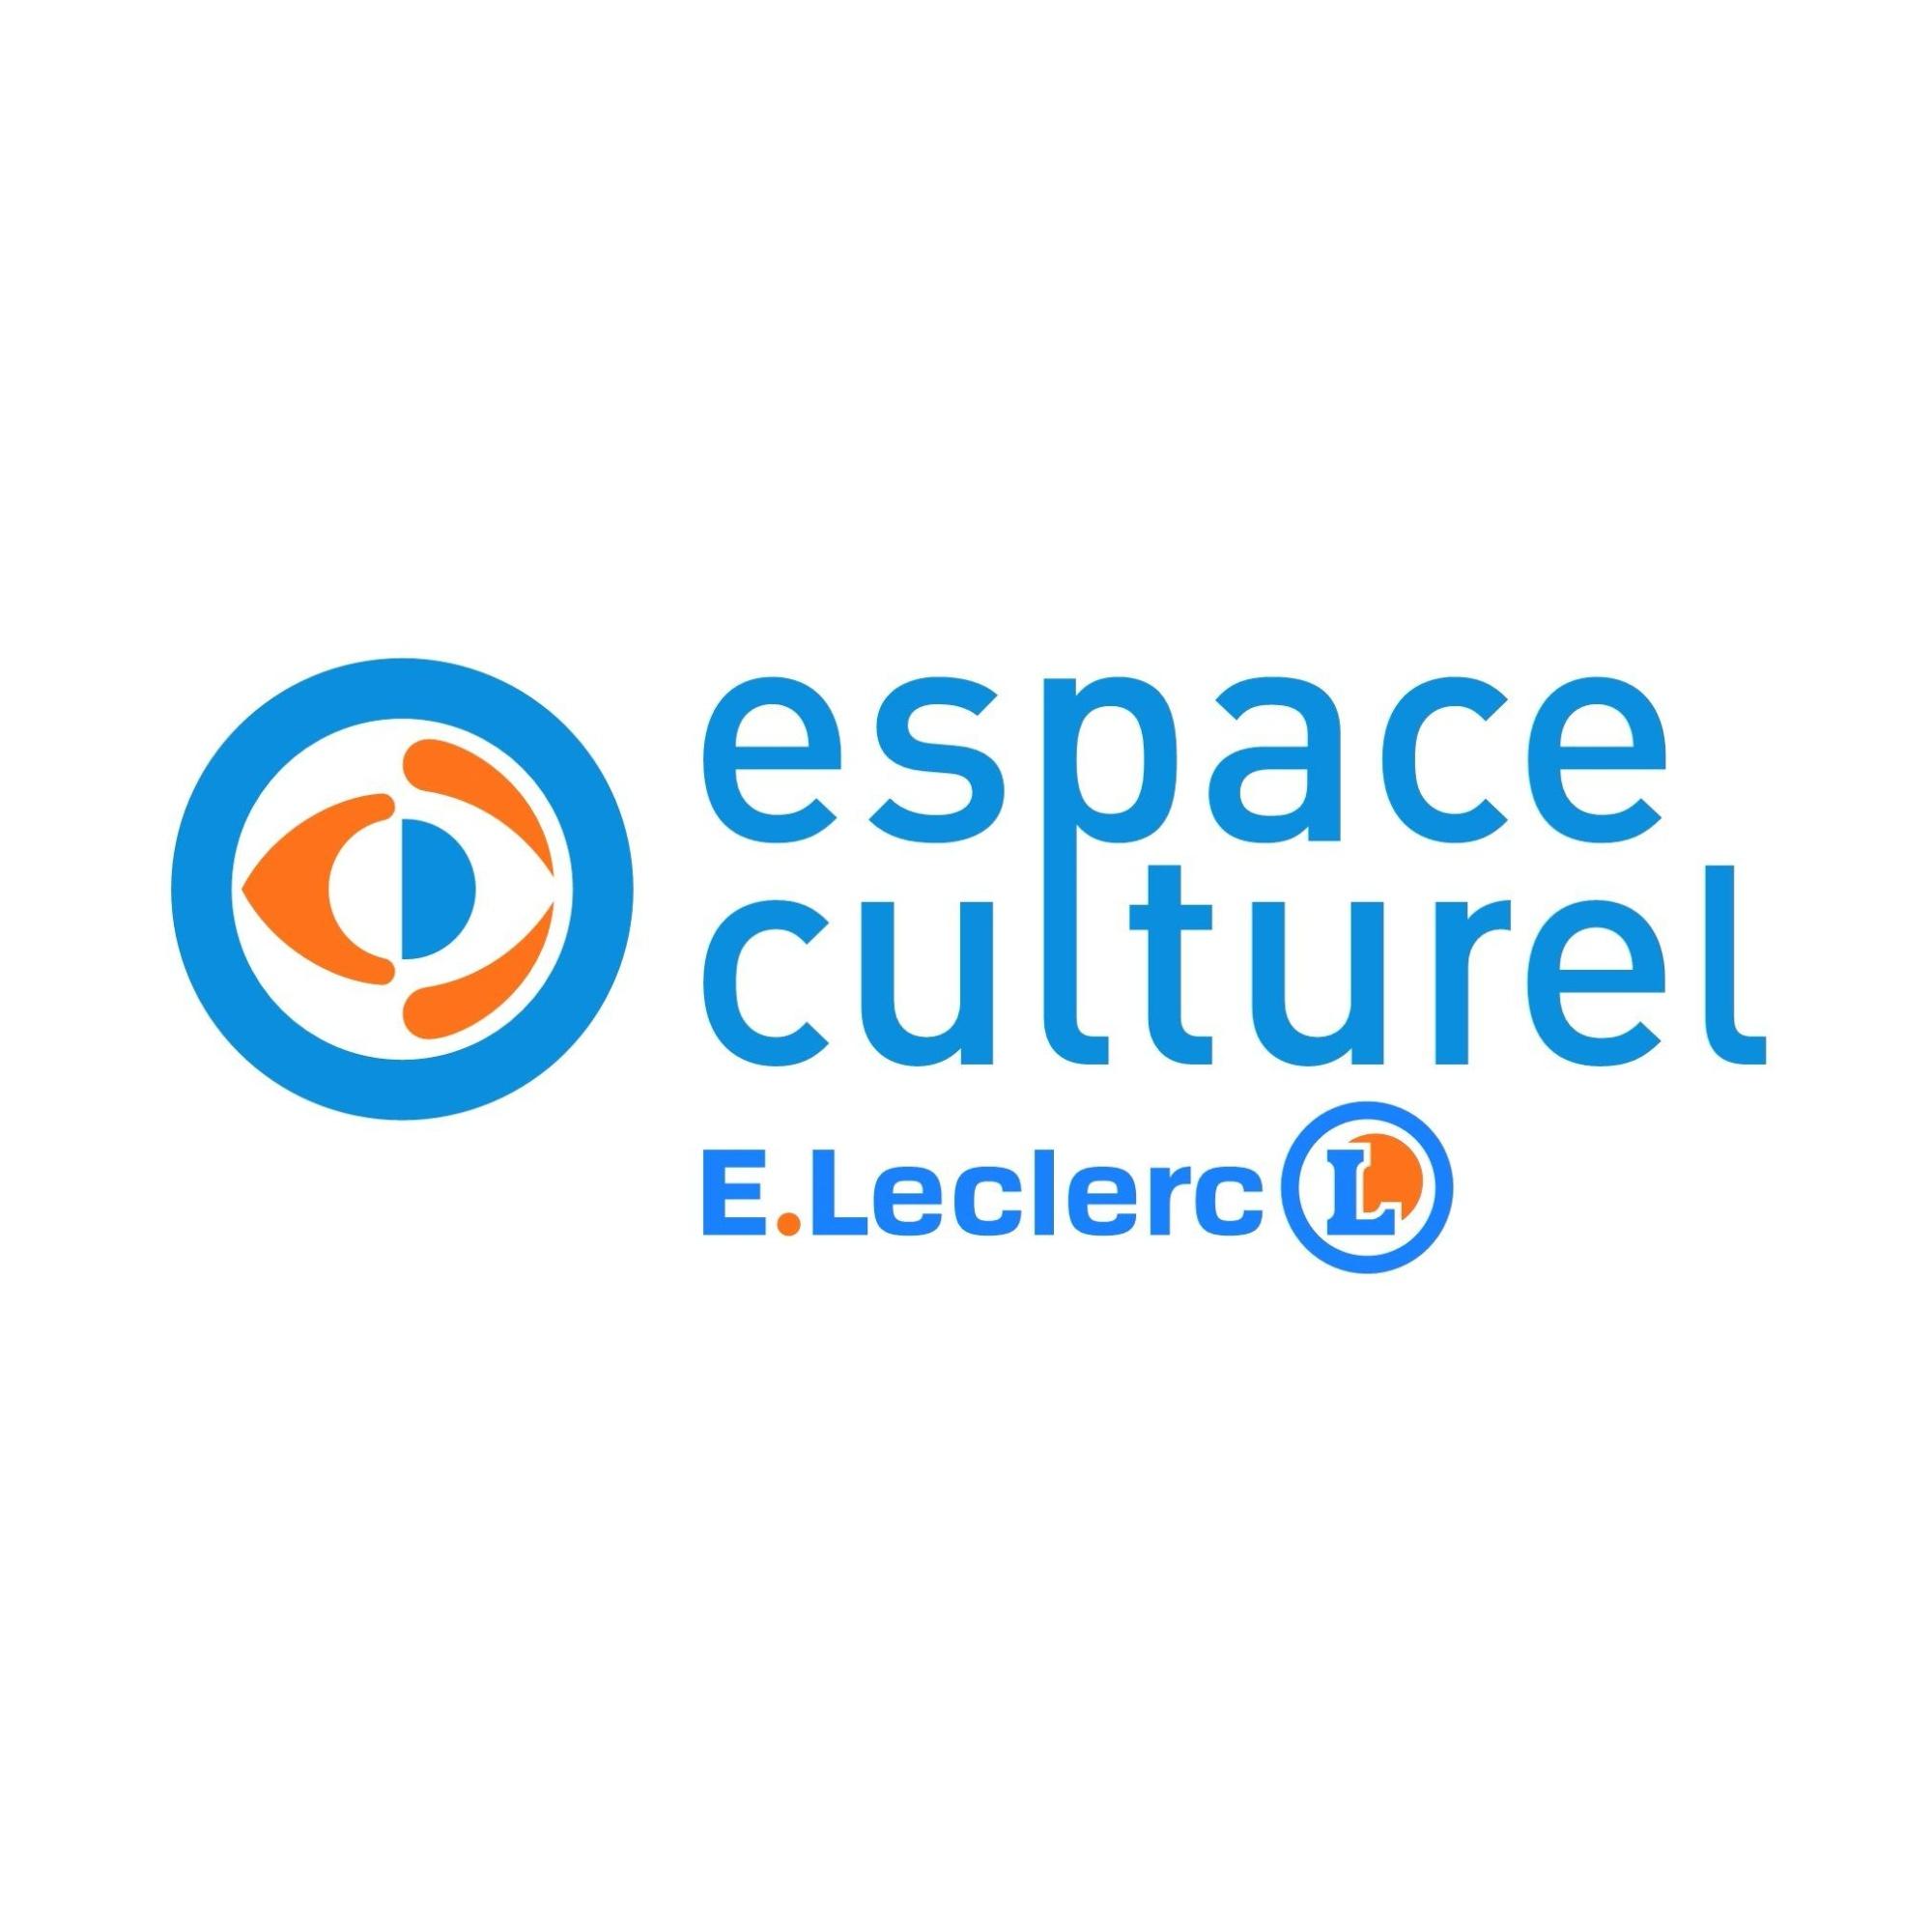 E.leclerc Espace Culturel Saint Herblain